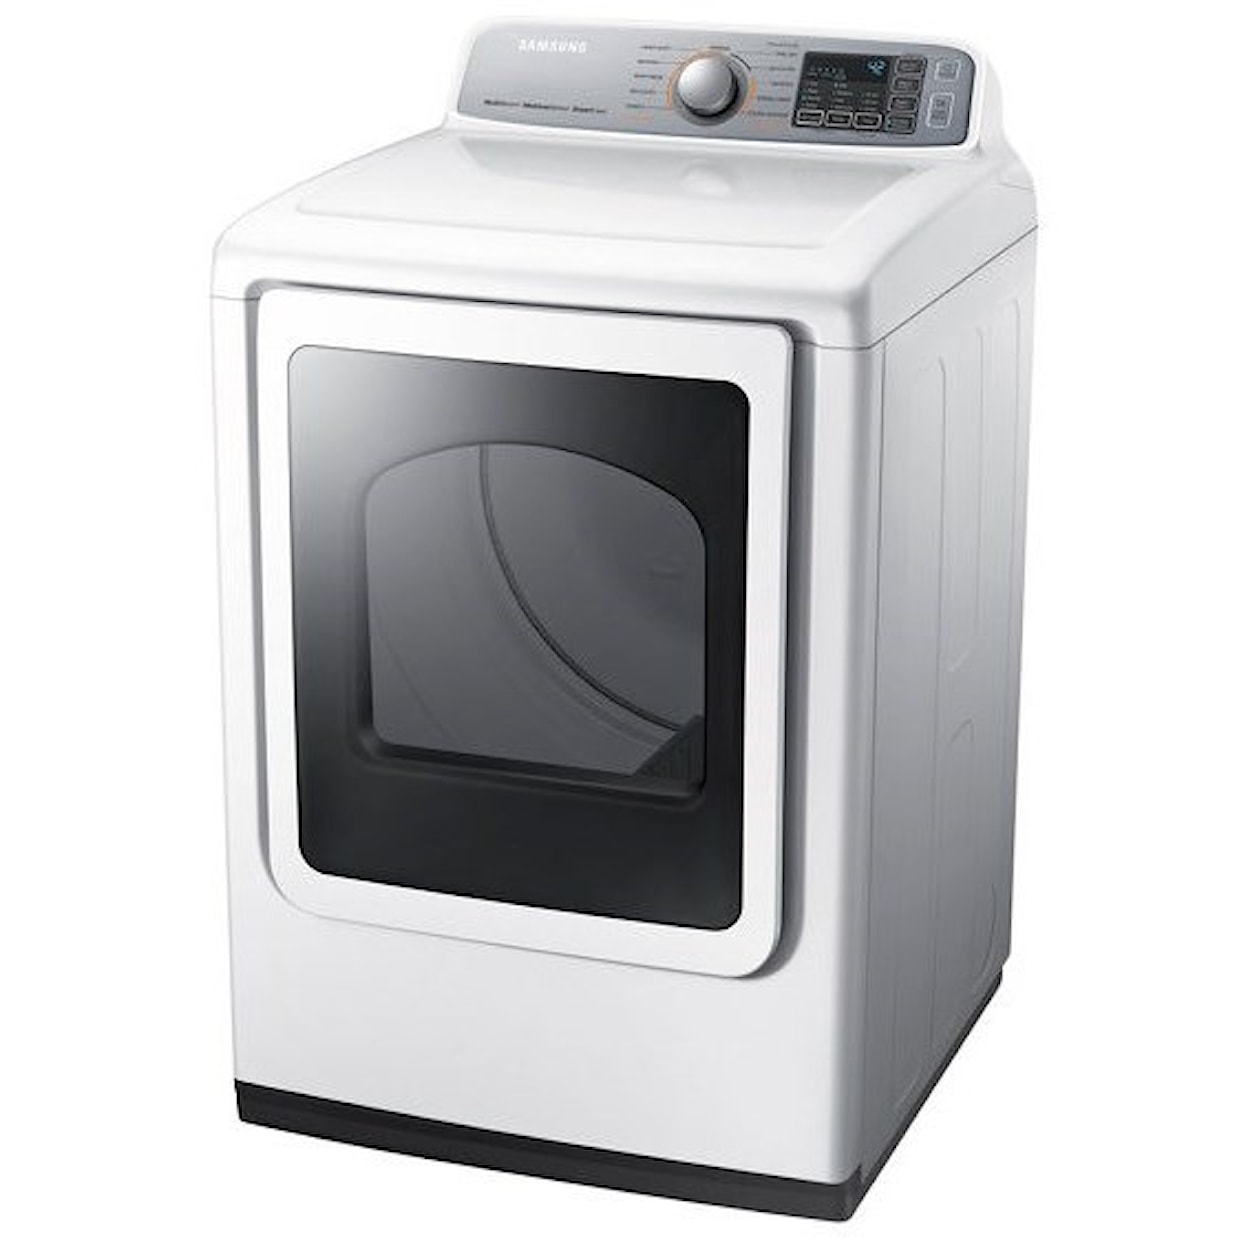 Samsung Appliances Gas Dryers - Samsung DV7450 7.4 cu. ft. Gas Dryer